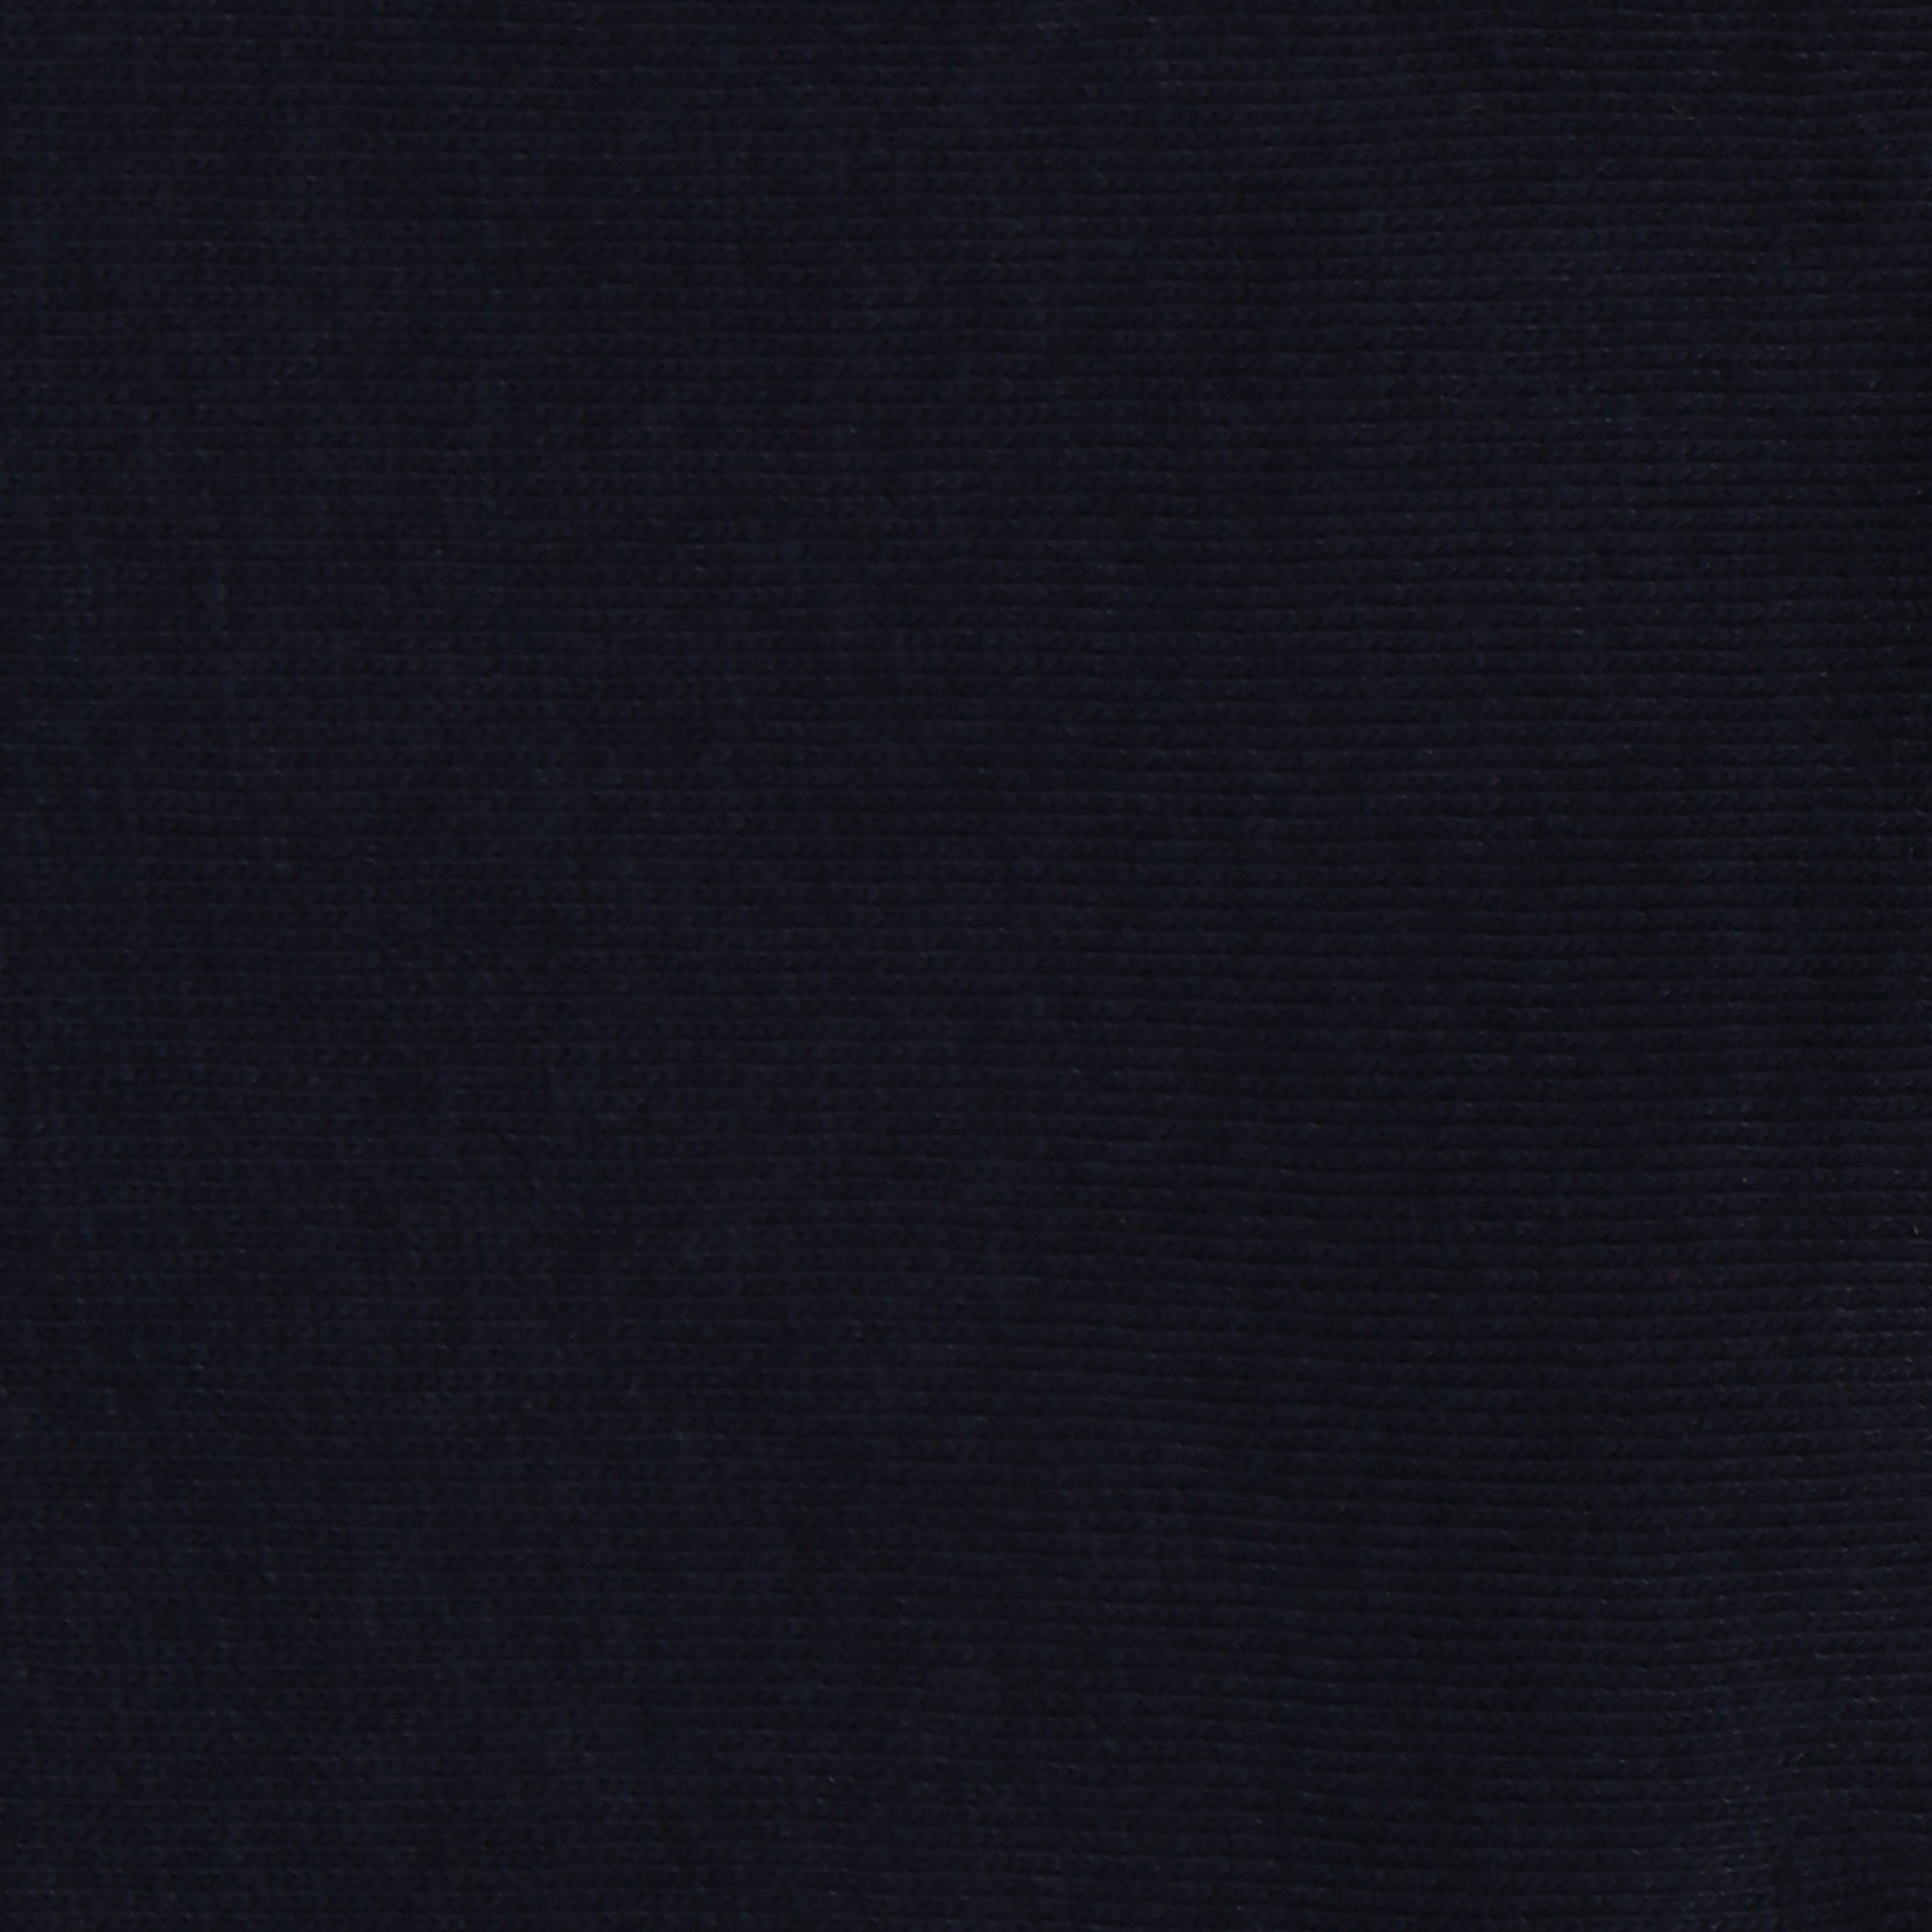 Футболка мужская M-1 Promo темно-синяя с коротким рукавом XL, цвет синий, размер XL - фото 3